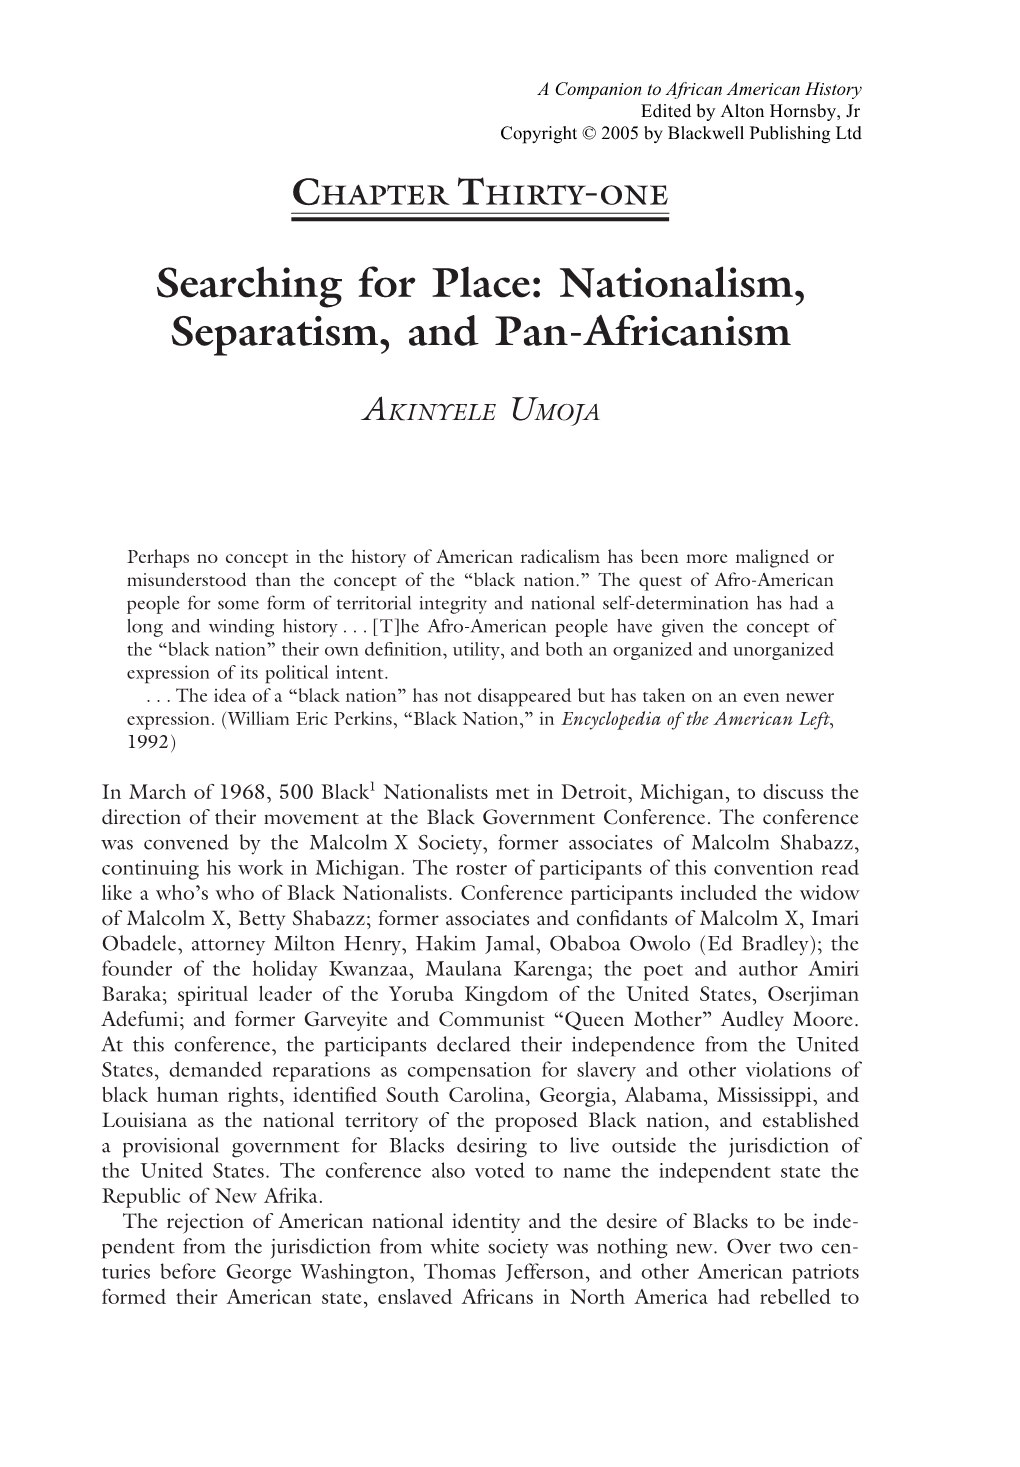 Nationalism, Separatism, and Pan-Africanism